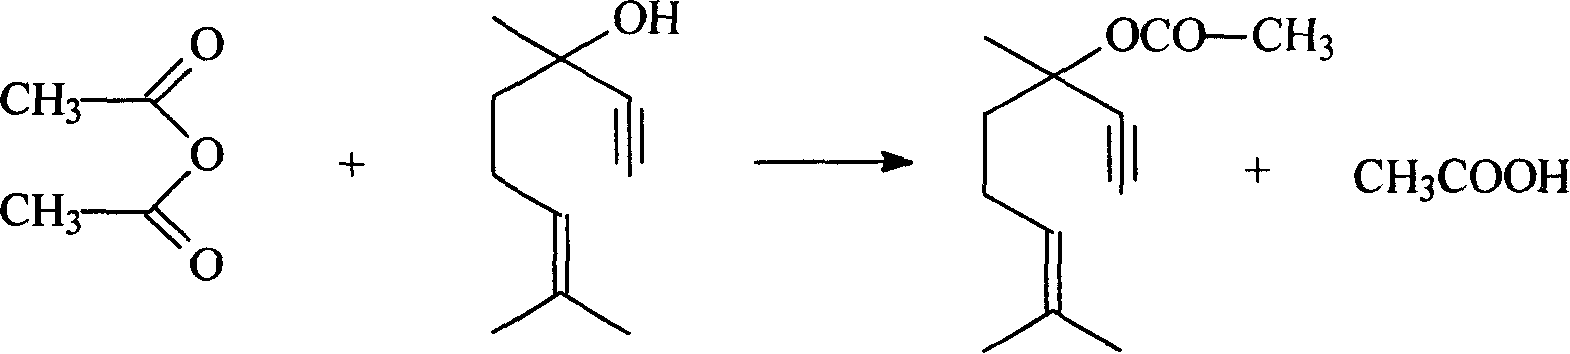 Method for preparing linalyl acetate from dehydrolinalool